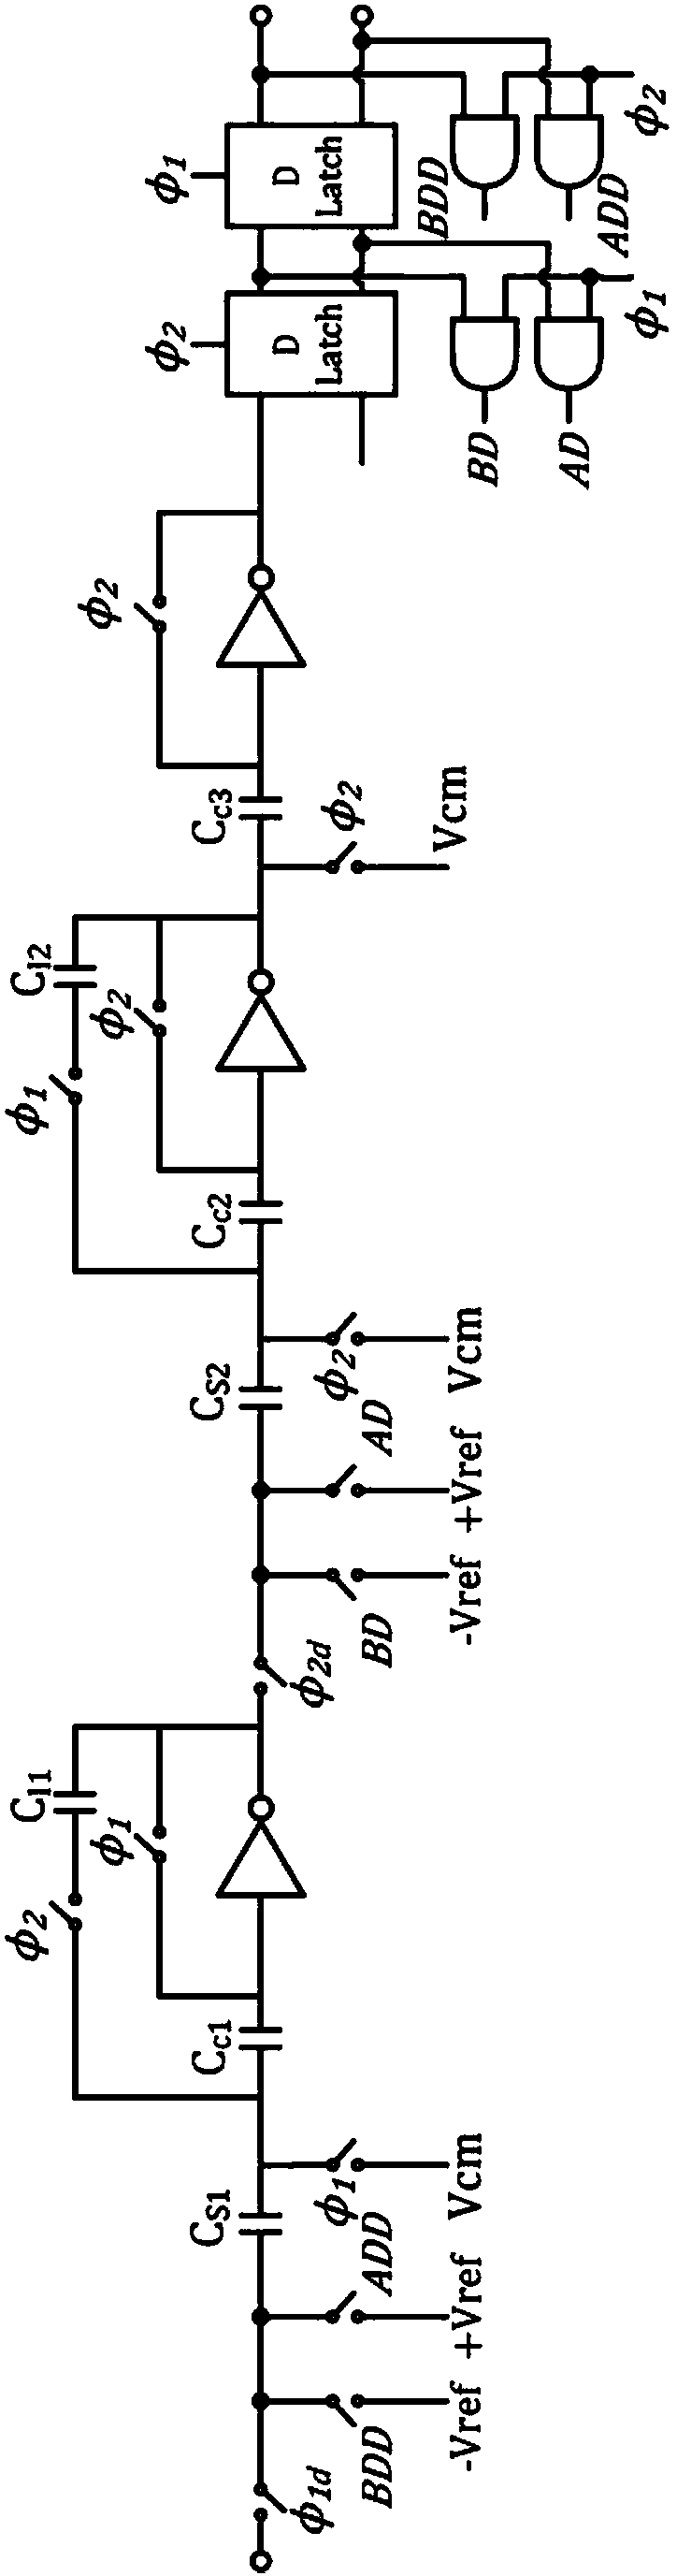 An all-digital block sigma‑delta modulator based on an inverter